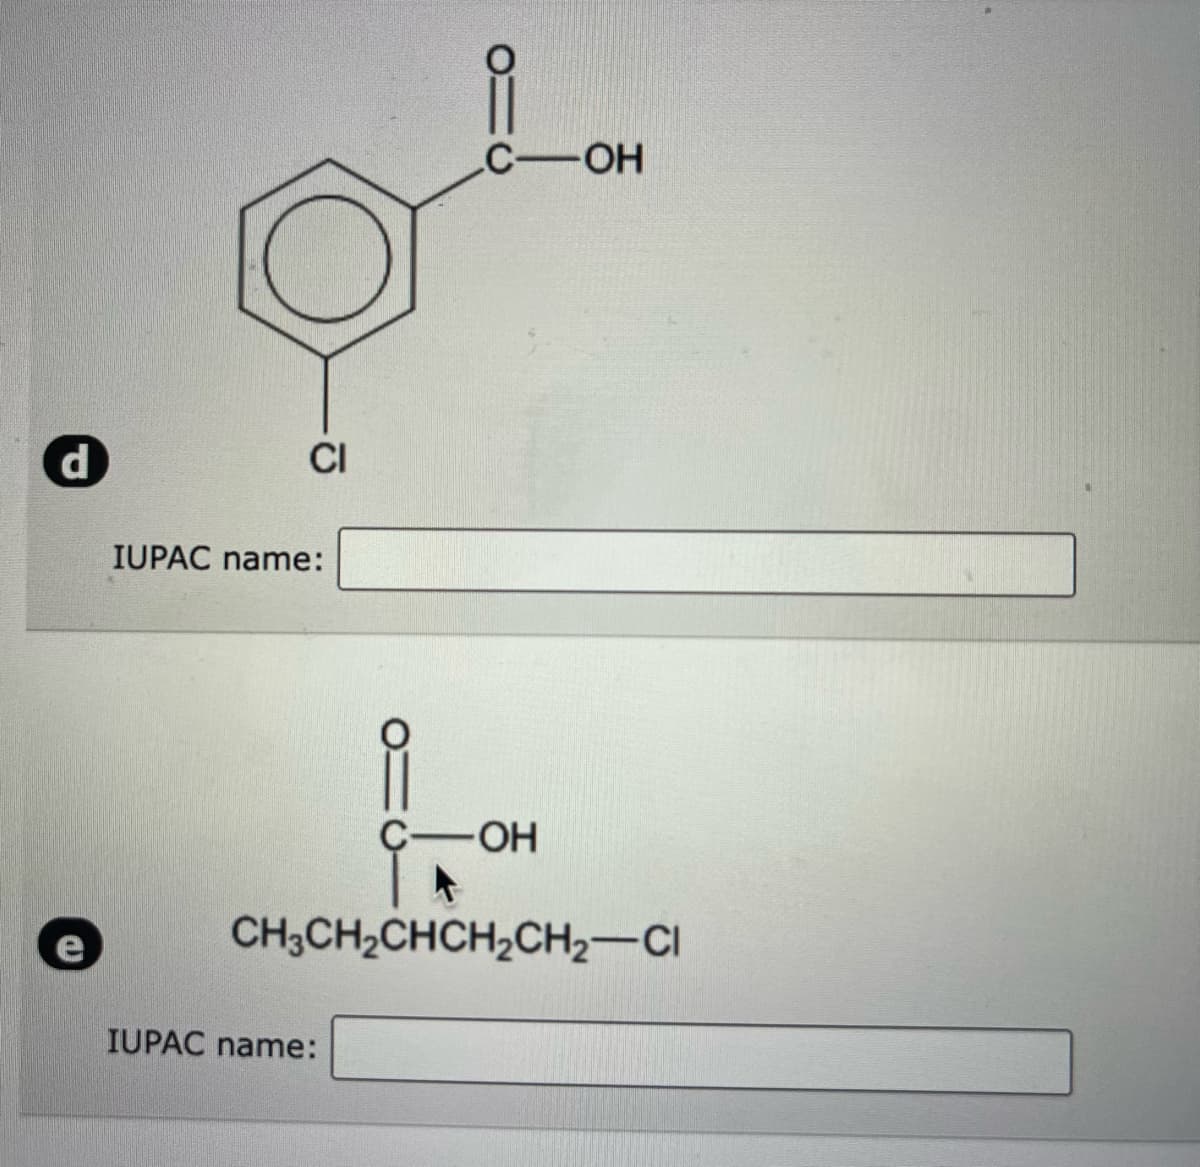 d
CI
IUPAC name:
O C
IUPAC name:
C-OH
-OH
▸
CH3CH₂CHCH₂CH₂-Cl